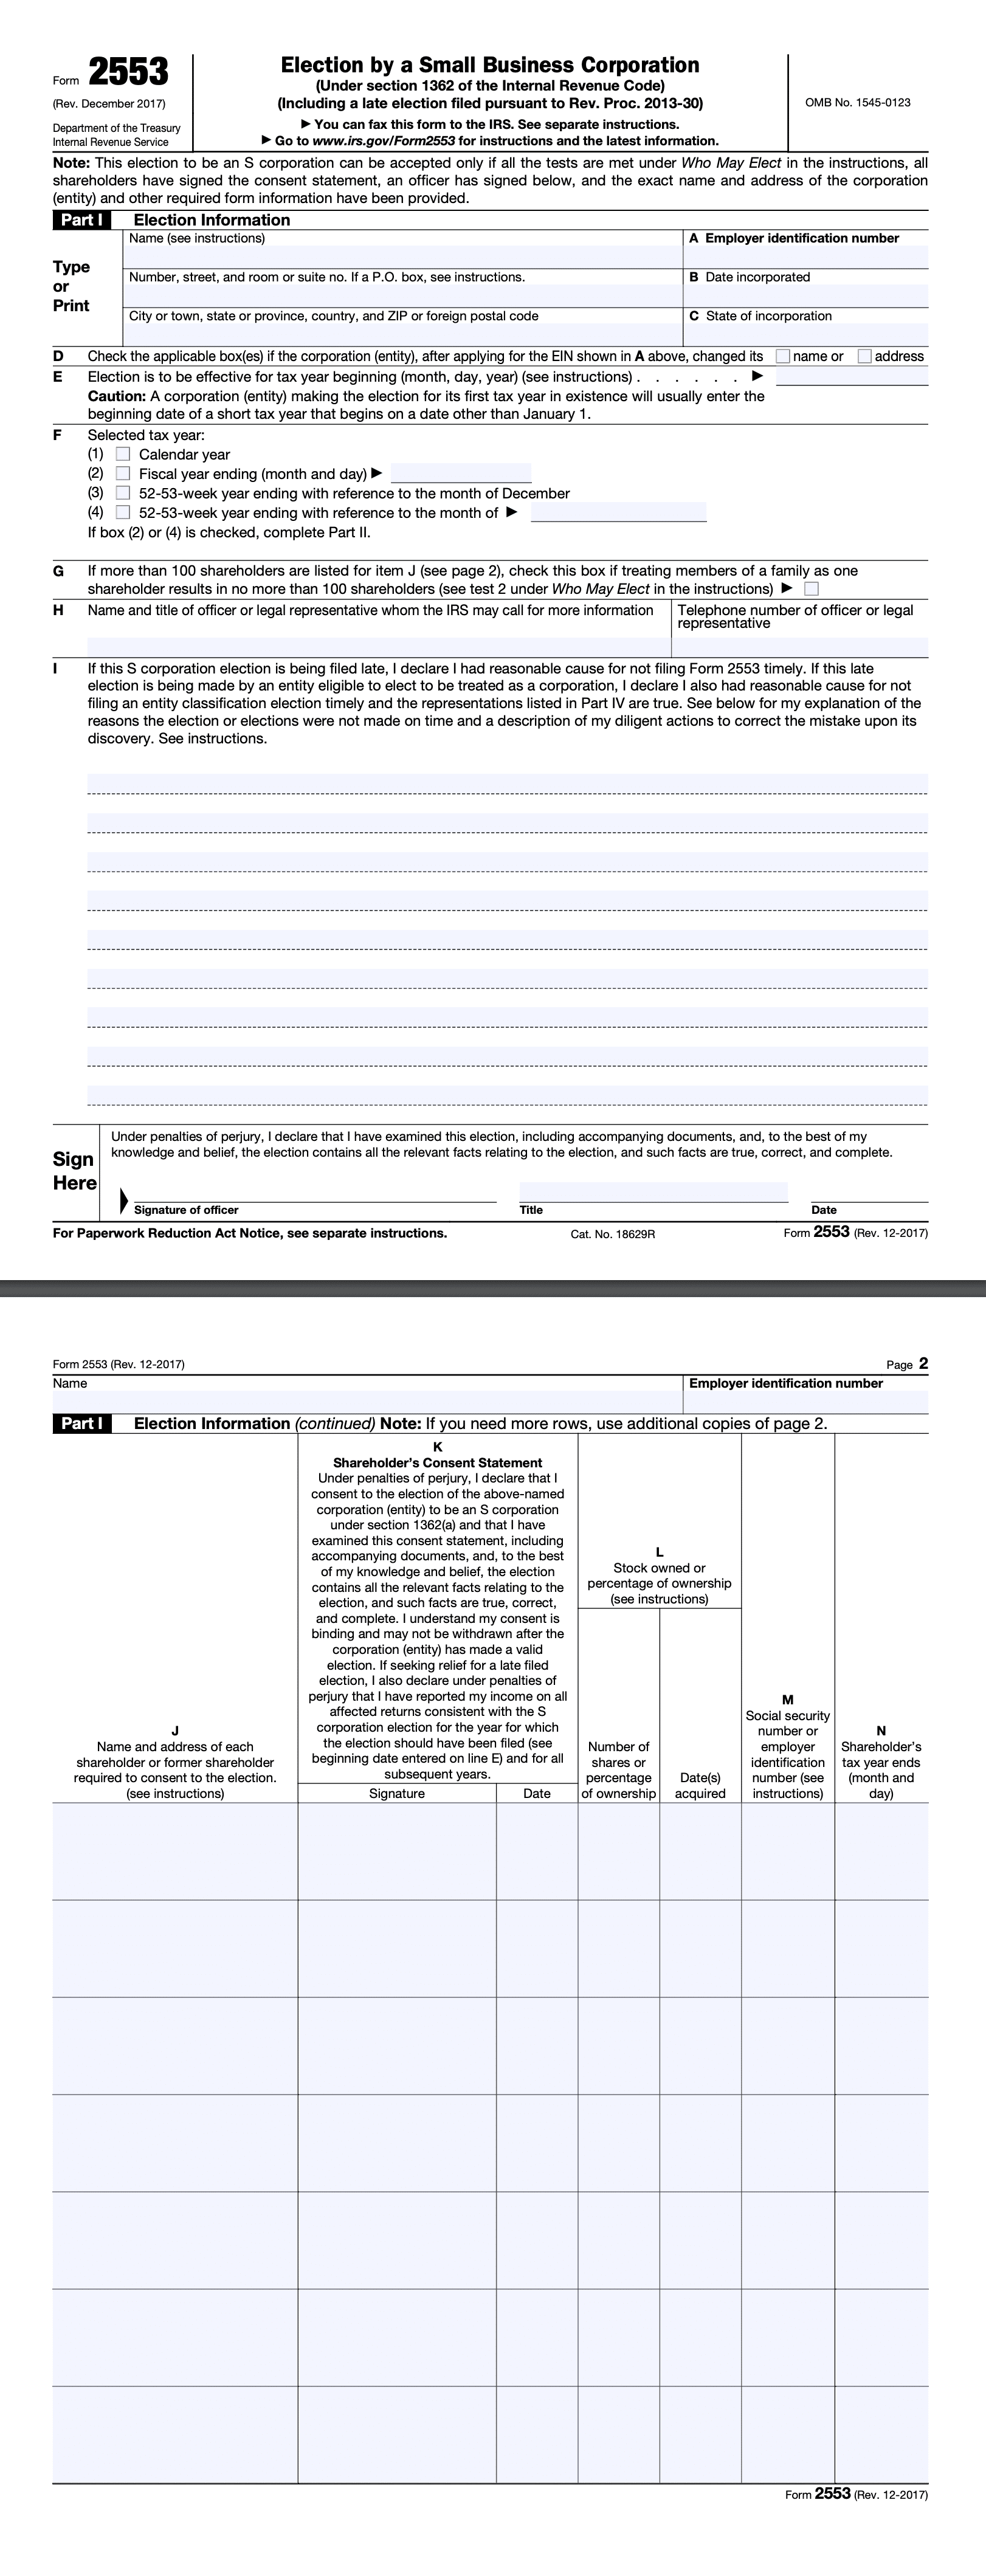 Screenshot of part I of IRS Form 2553